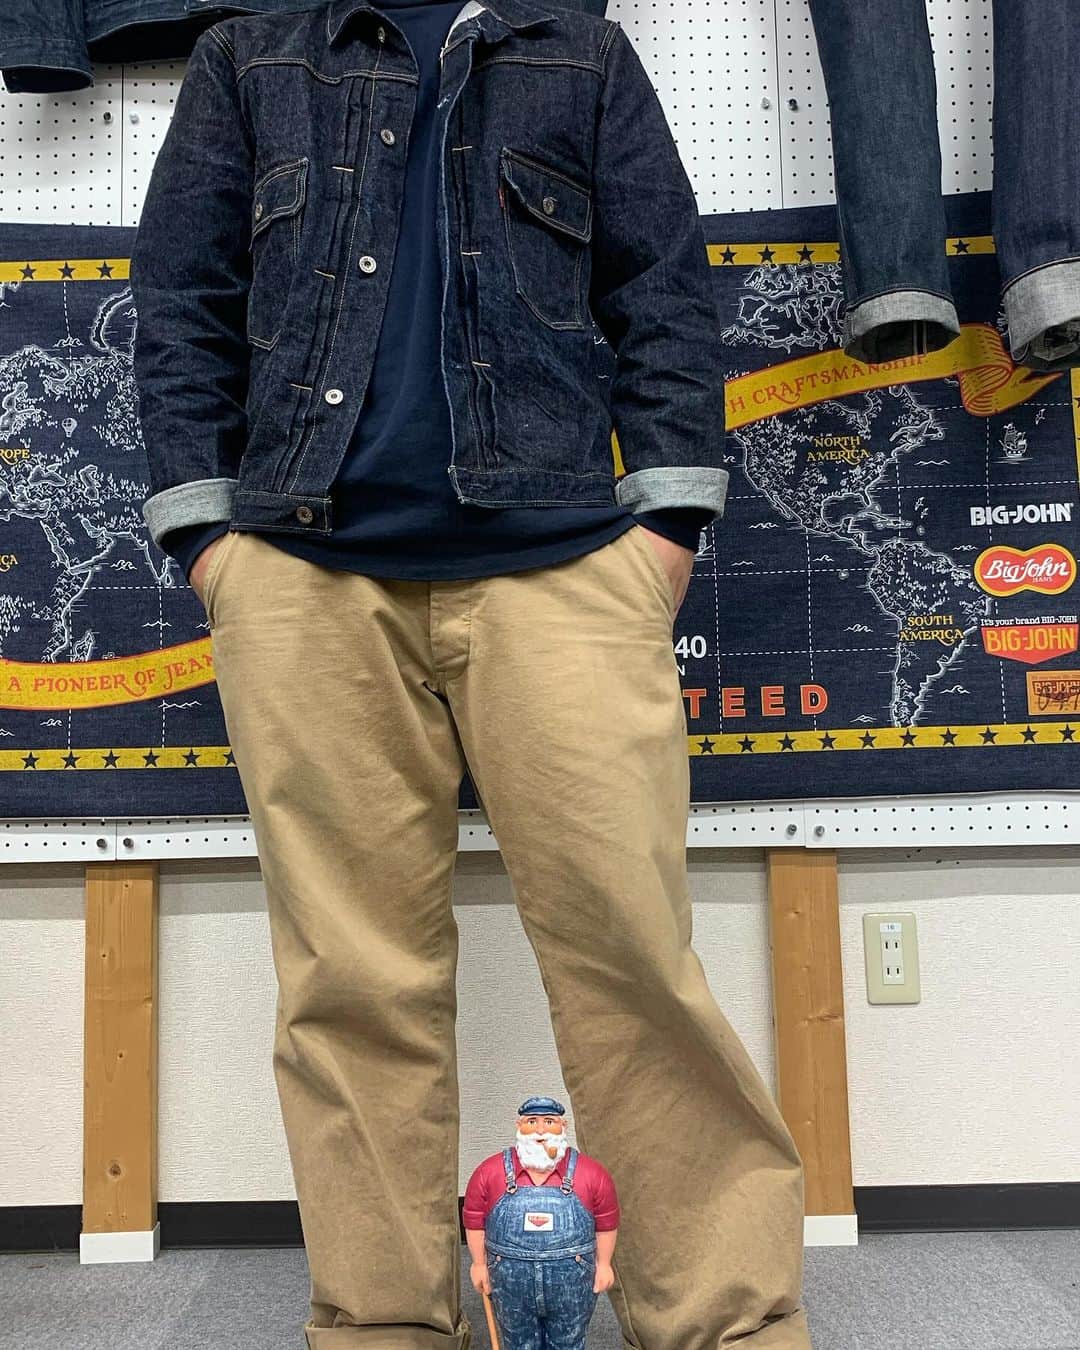 BIG JOHNのインスタグラム：「毎度です！ 本日は本社から📷by ChanNODA  17oz Heavy Gauge JACKET and エクストラチノ  好きな組み合わせの一つです。  A Pioneer in Japanese Jeans   -BIG JOHN- From KOJIMA to the world.  ◽️TOYOTA @bigjohnshop  @bigjohnjeans  ◽️A pioneer in Japanese Jeans   -BIG JOHN-    from KOJIMA to the world ◽️   TOYOTA (staff)  #BIGJOHN #bigjohn #RARE#倉敷 #KOJIMA #JEANS #jeans #okayama #denim #TOYOTA #kojimajeans#okayamadenim#japanmade#madeinjapan#original #RAREJEANS  #育てる #ビッグジョン #児島　#ジーンズストリート  #岡山県　#365daysoffade #瀬戸大橋　#indigoinvitational 　#最高の色落ち　#坂本藍聖　#XXXXEXTRA  #姫路　#レザー　#ベルト」